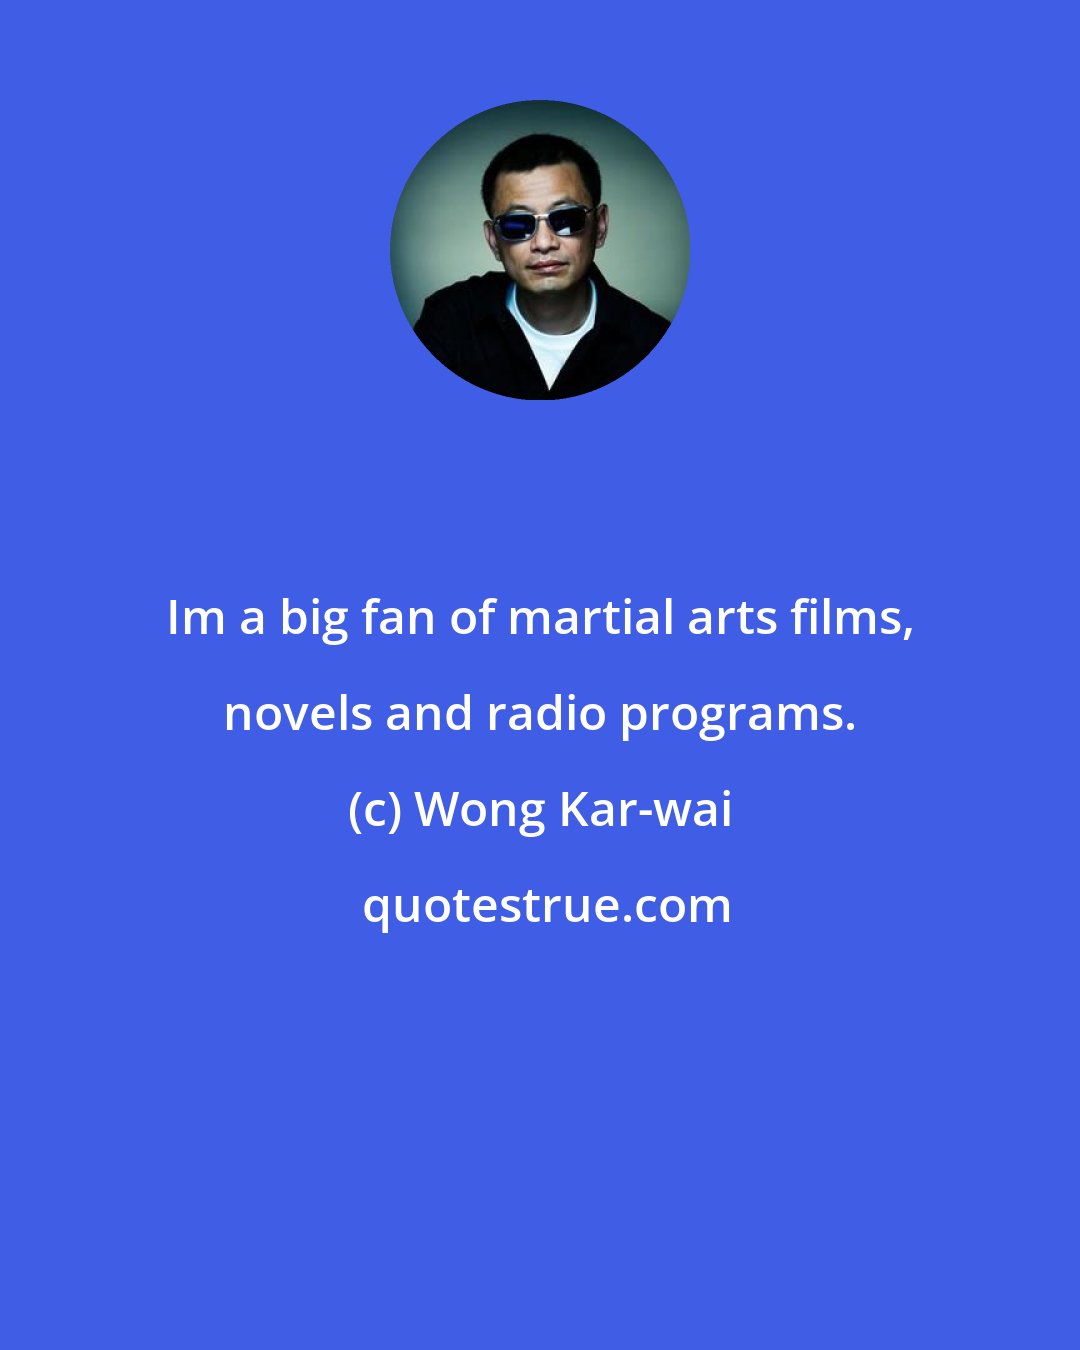 Wong Kar-wai: Im a big fan of martial arts films, novels and radio programs.